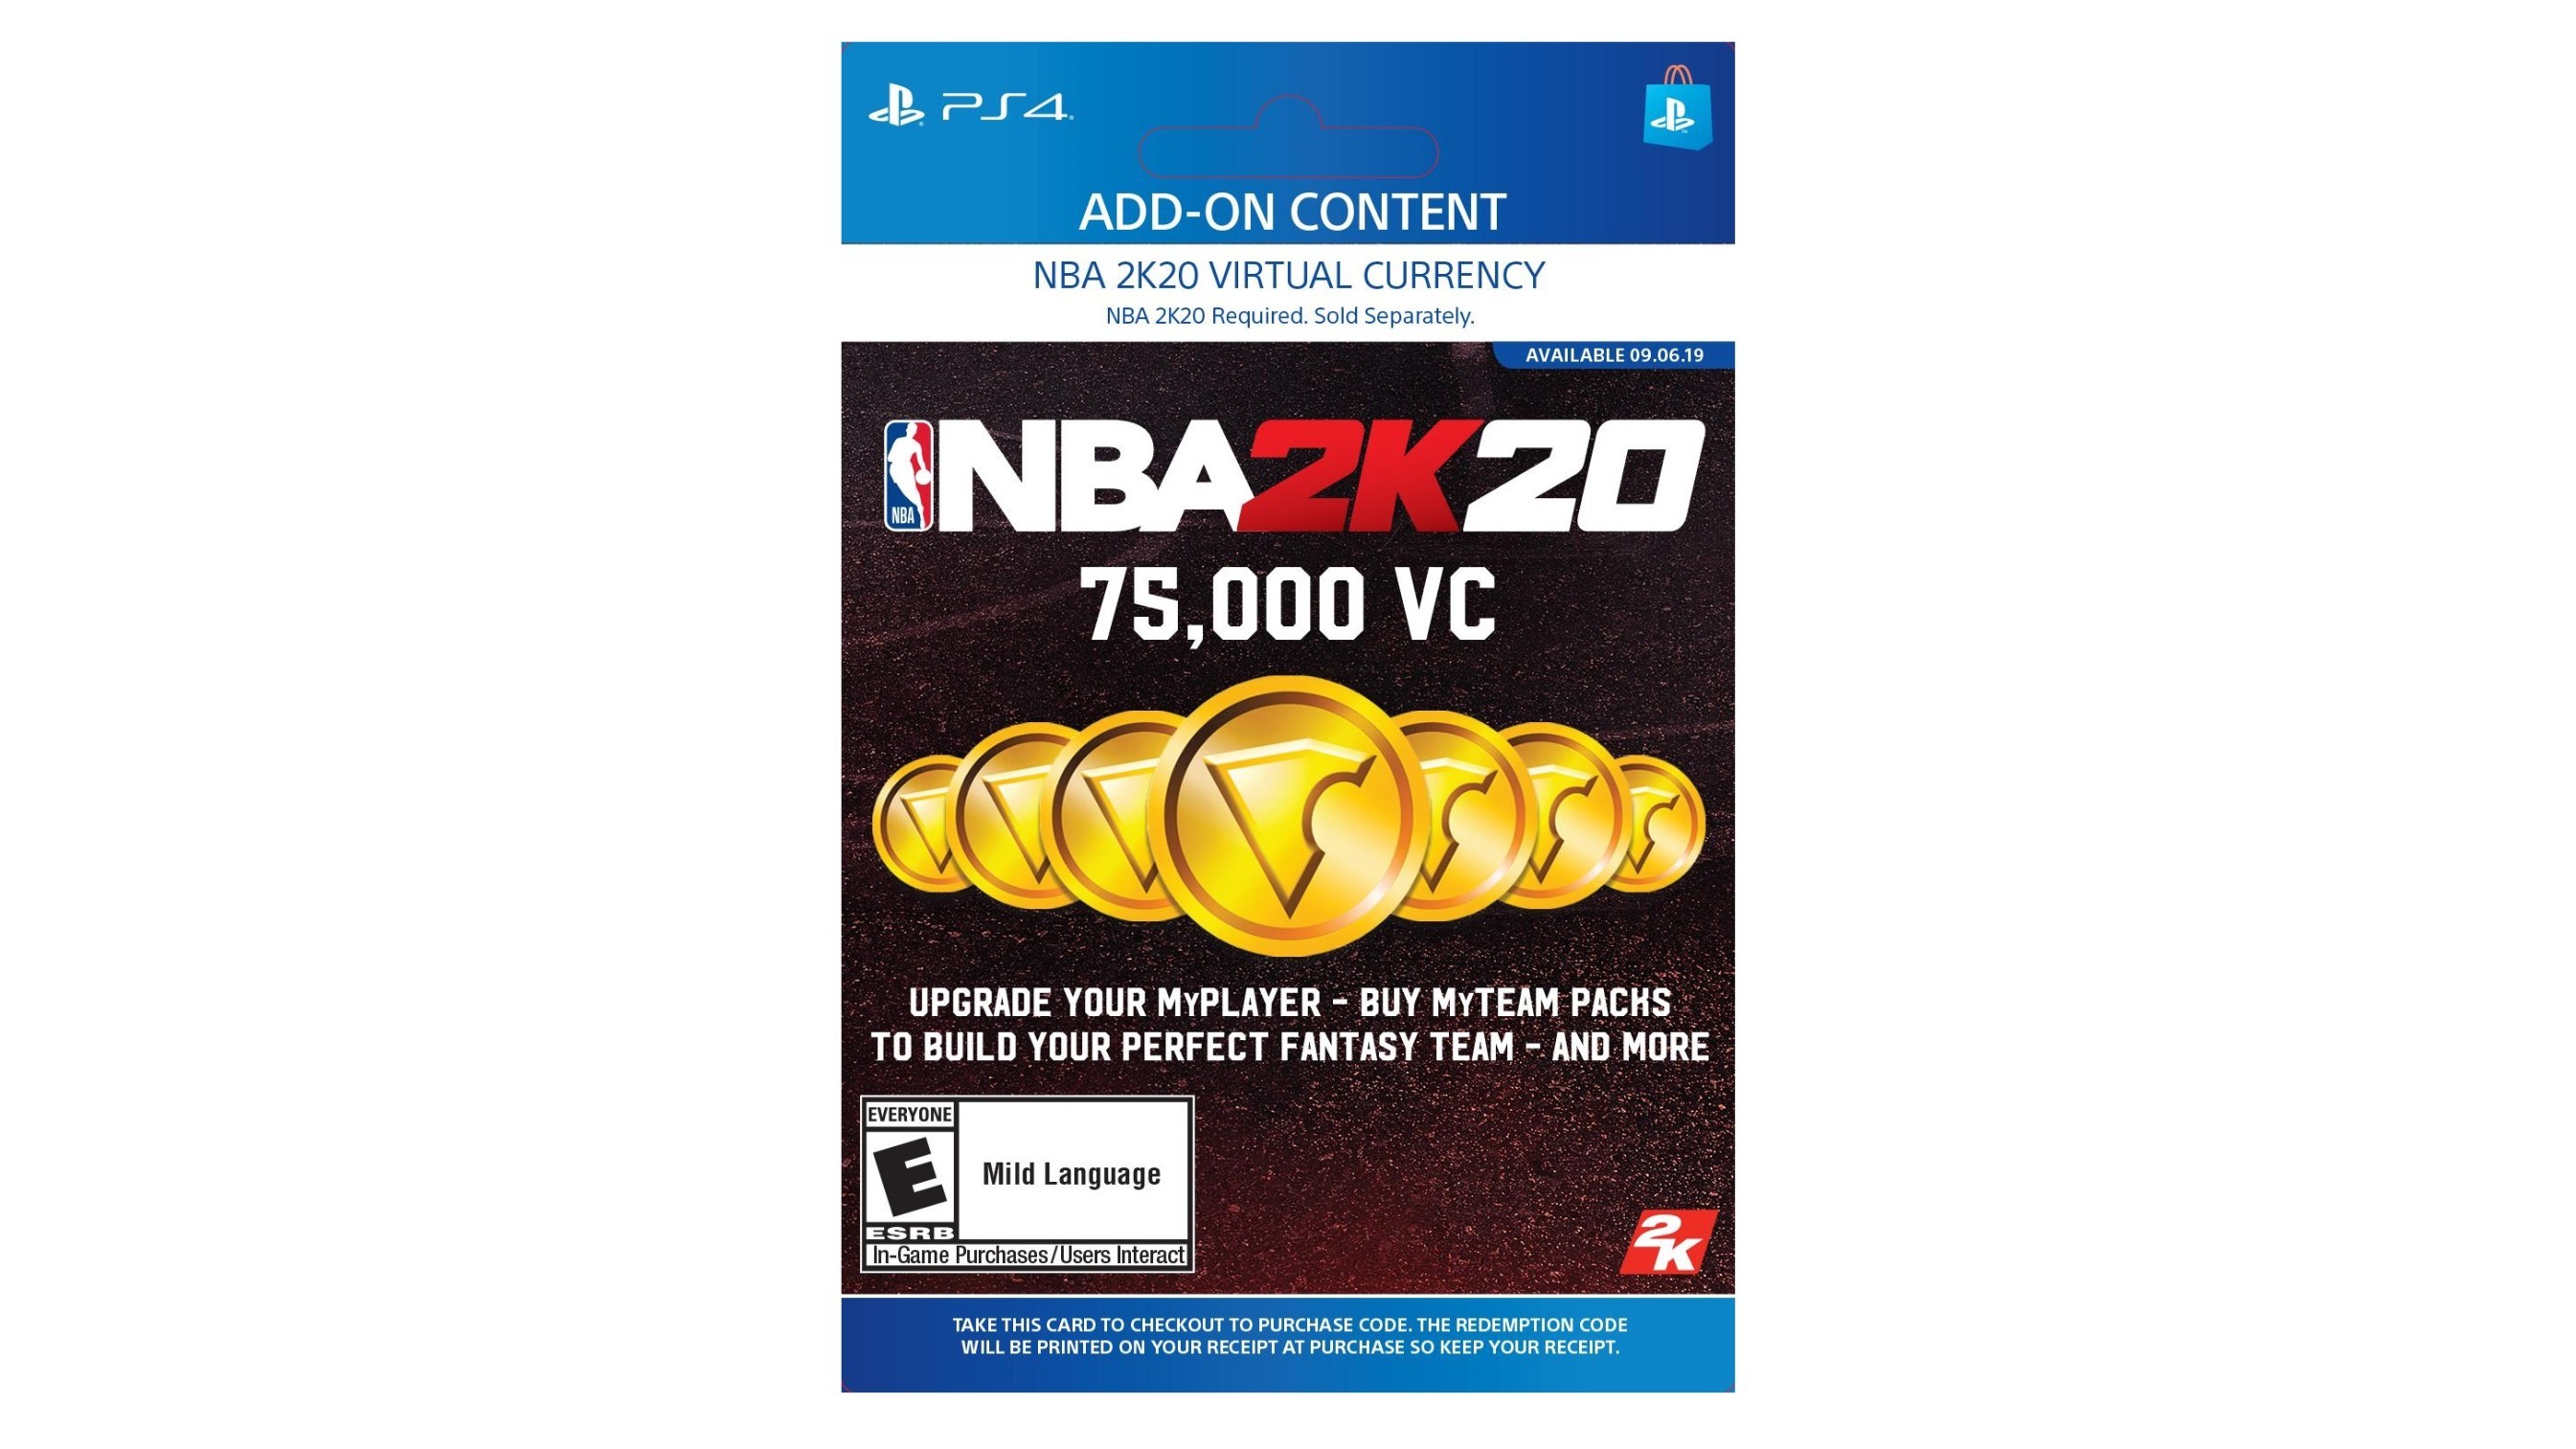 Cyber Monday NBA 2K20 Deals--Lowest Price Yet - GameSpot